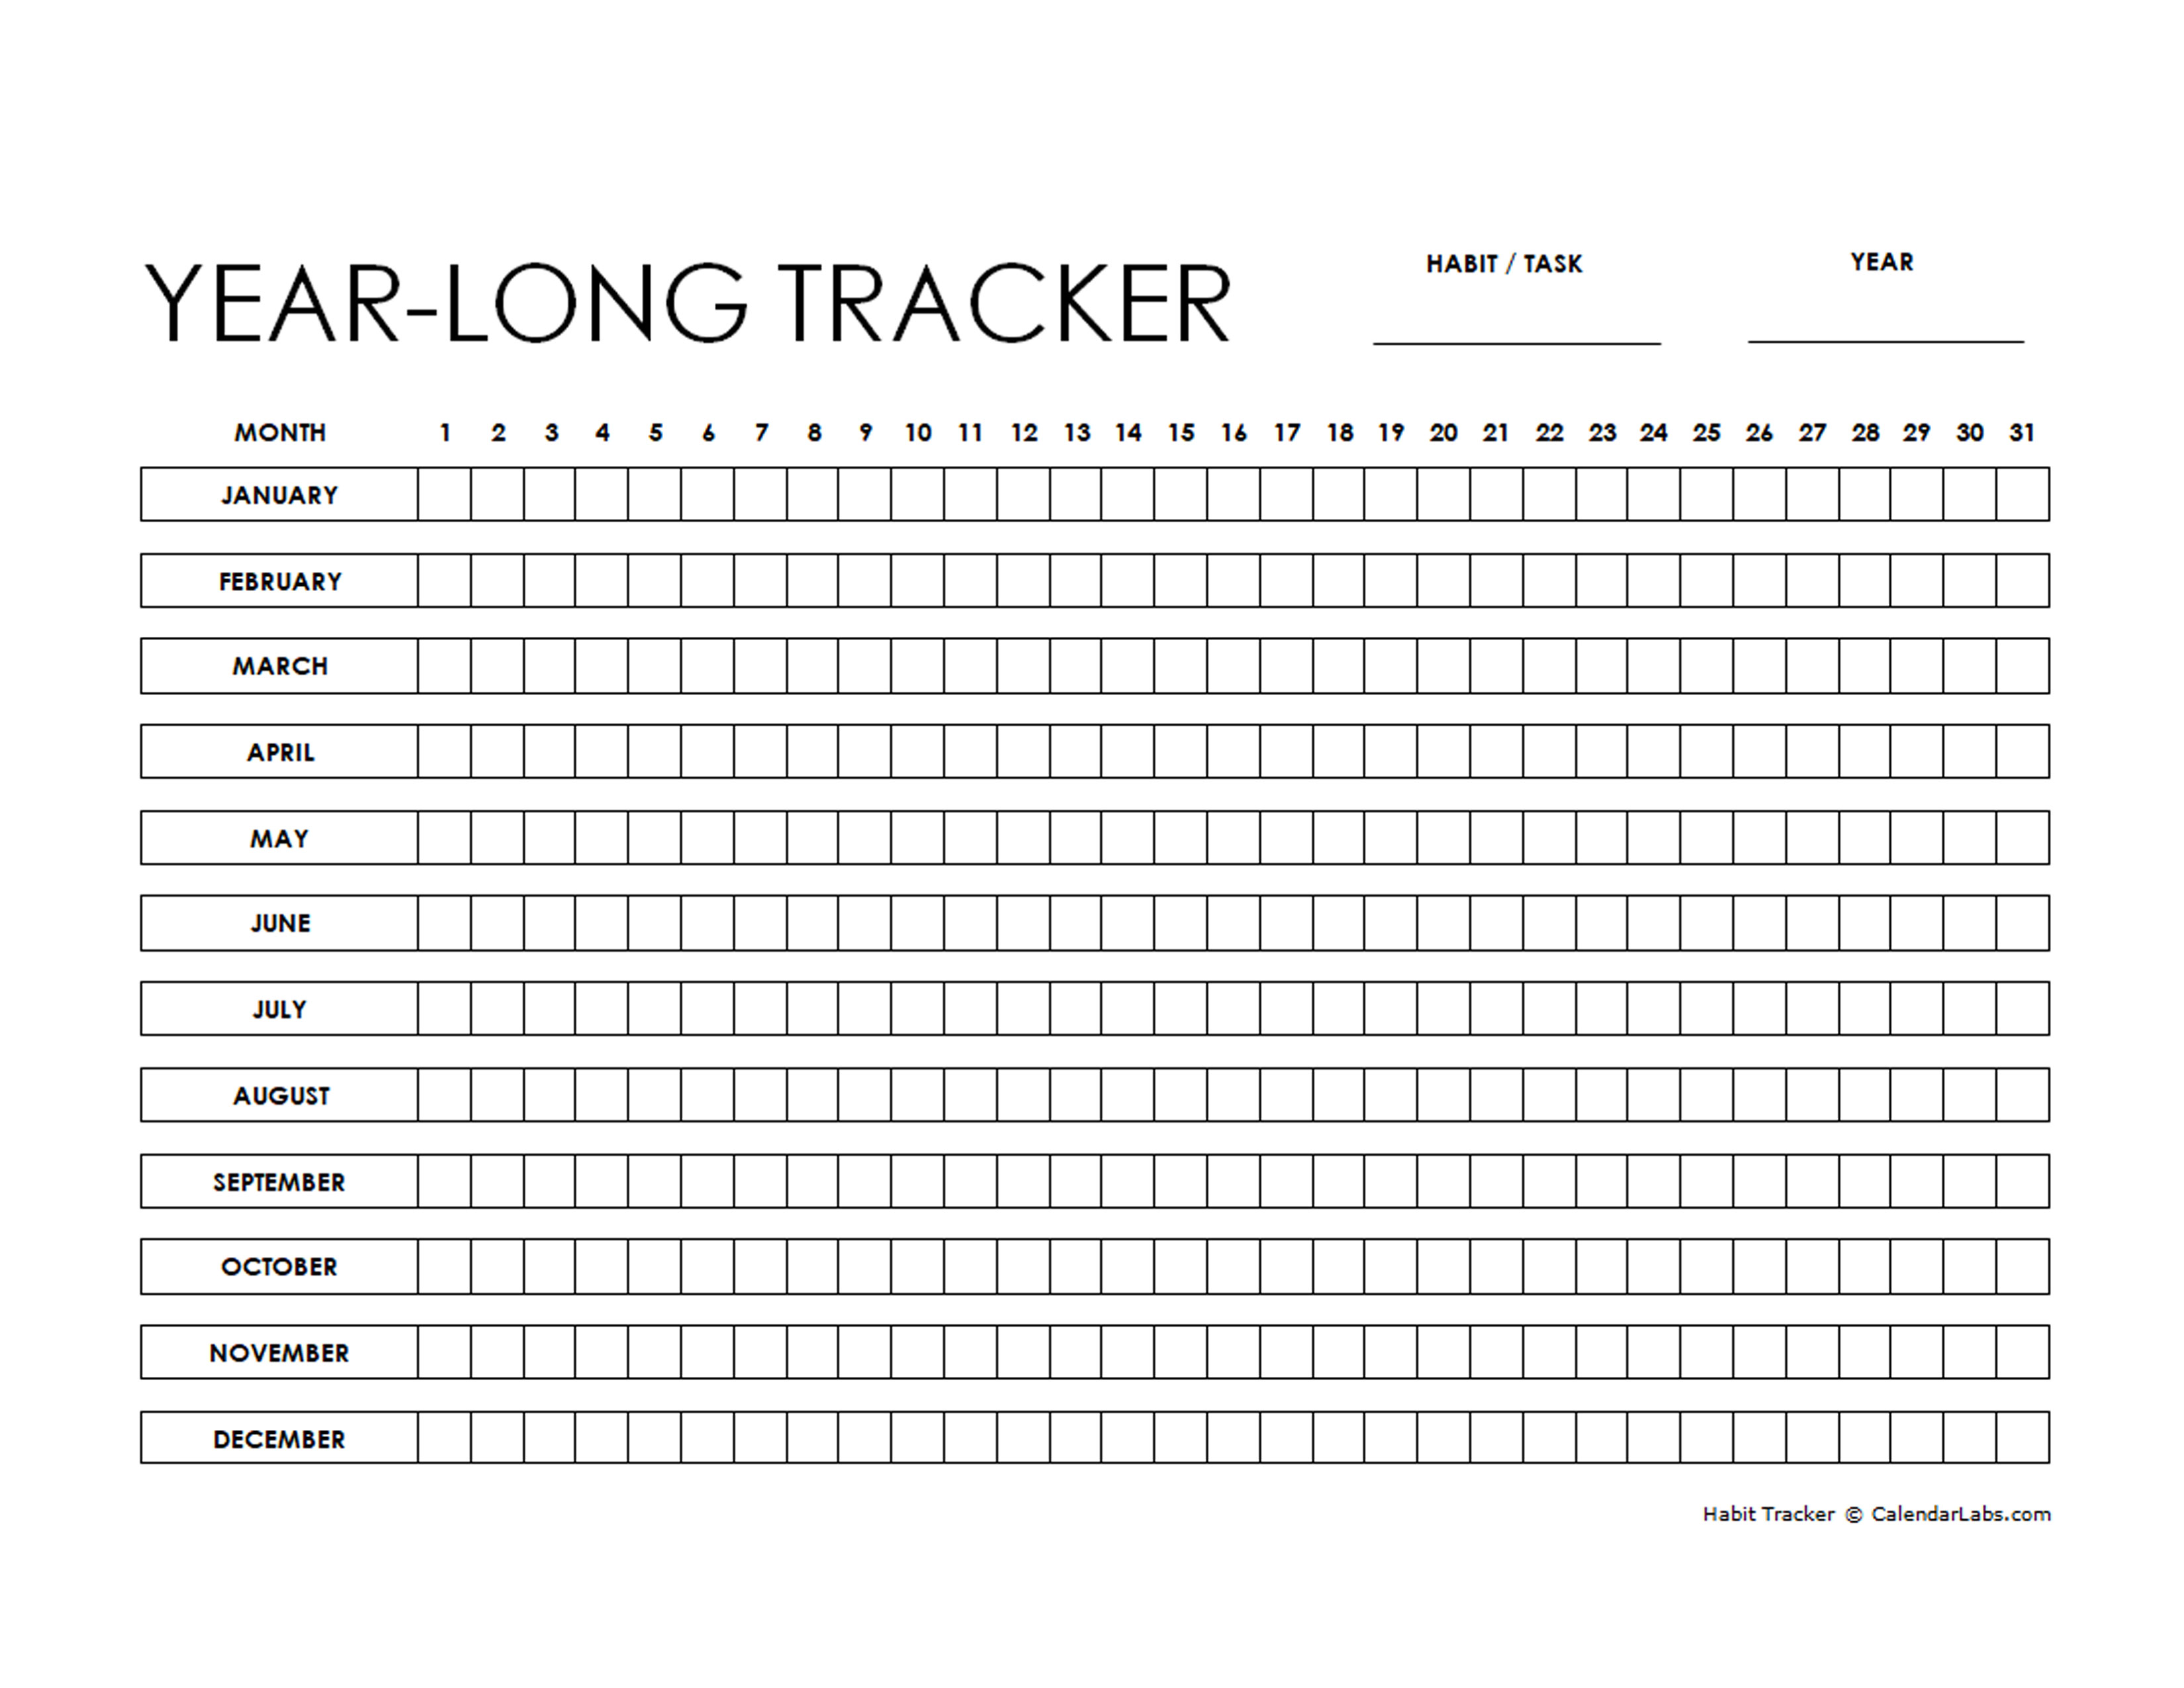 yearly-habit-tracker-printable-printable-templates